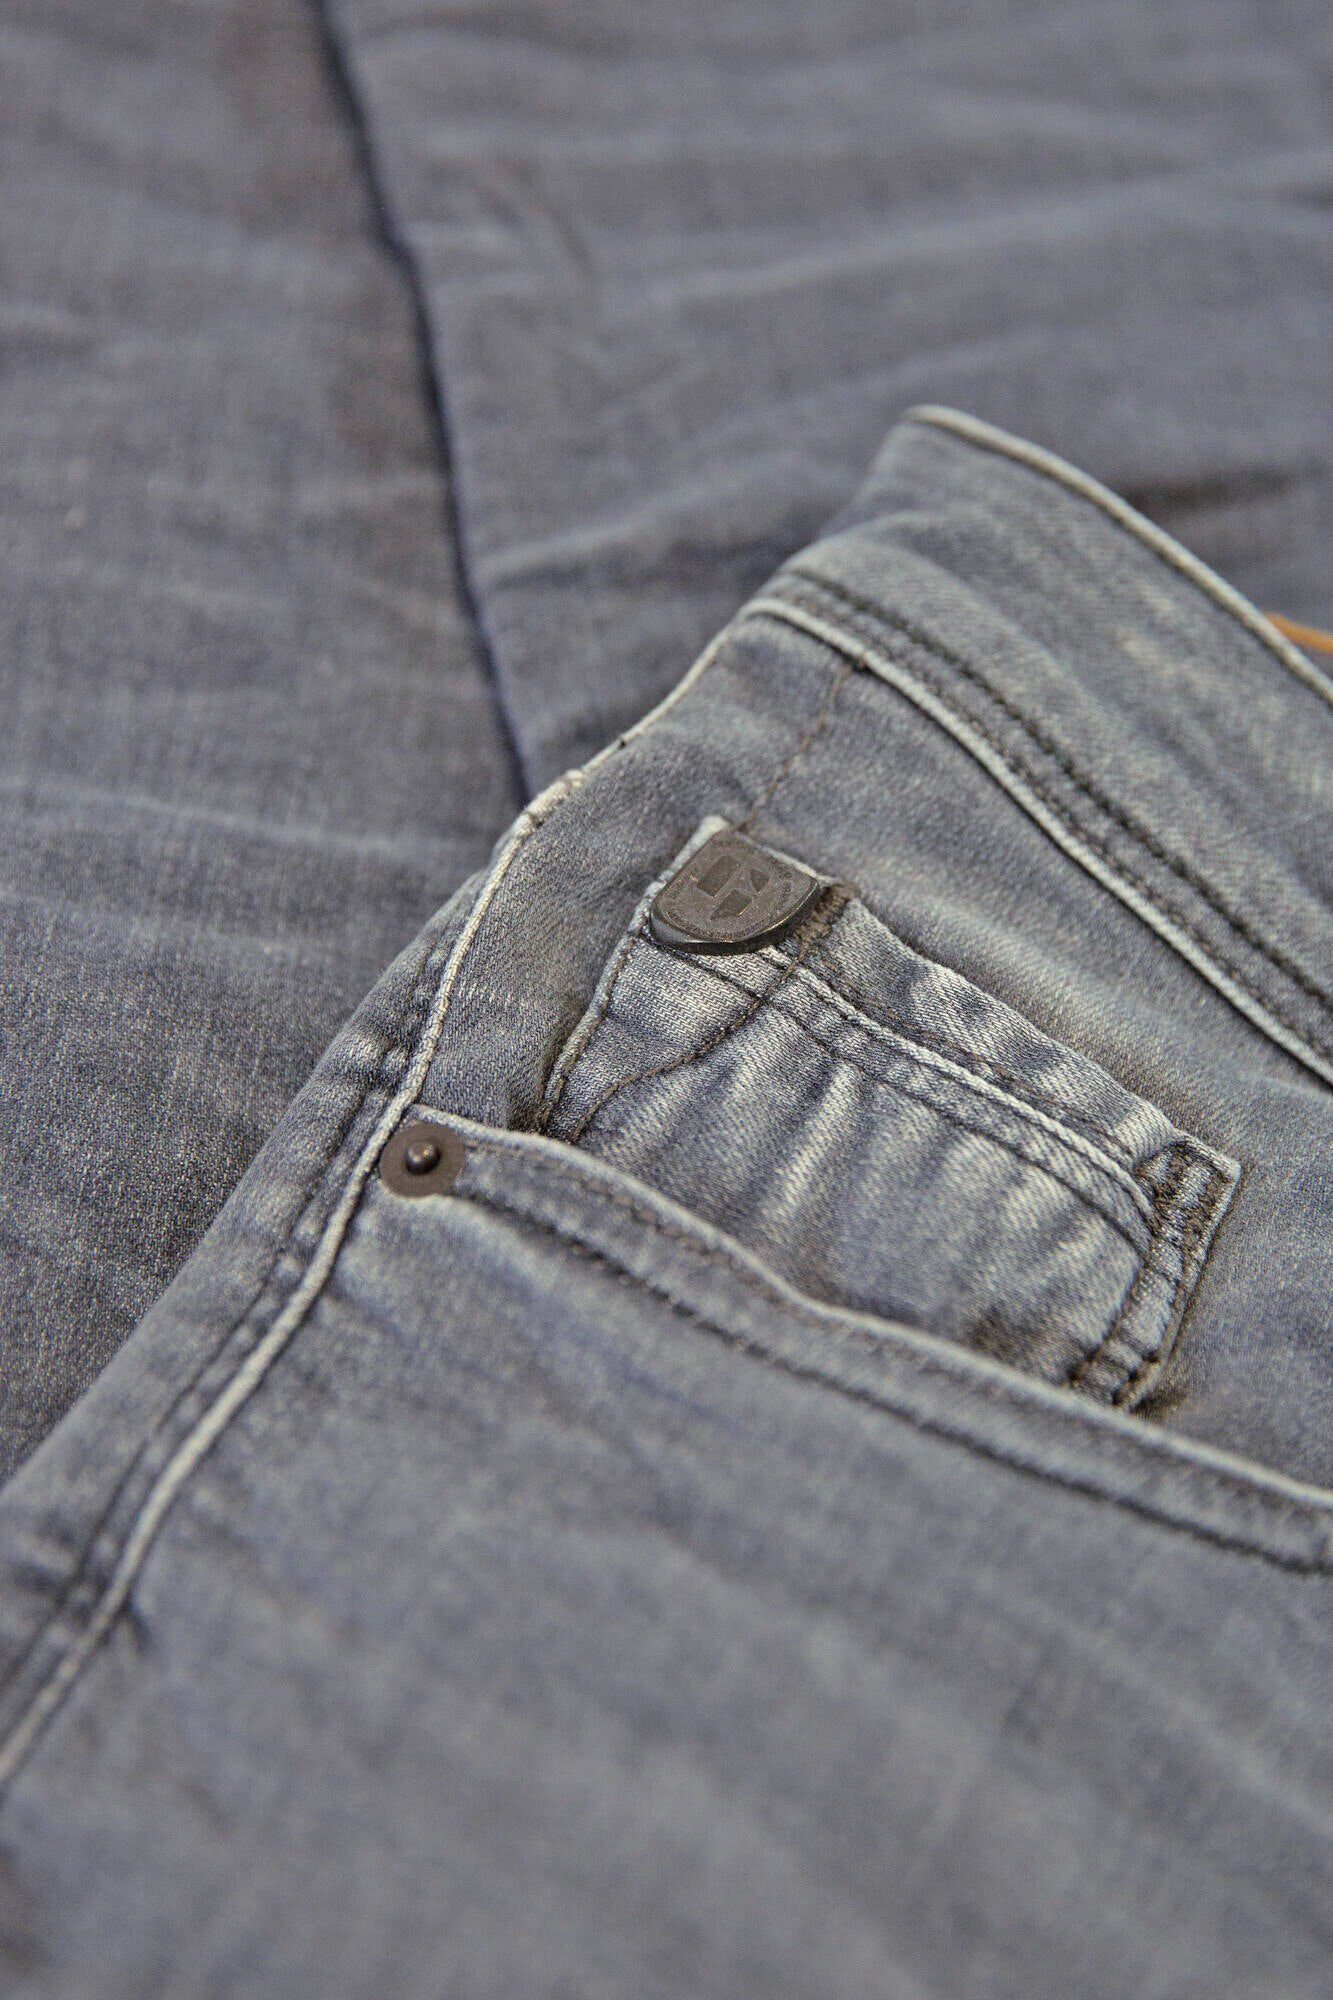 GARCIA JEANS 5-Pocket-Jeans GARCIA SAVIO medium grey 630.7020 Smoke used Denim 